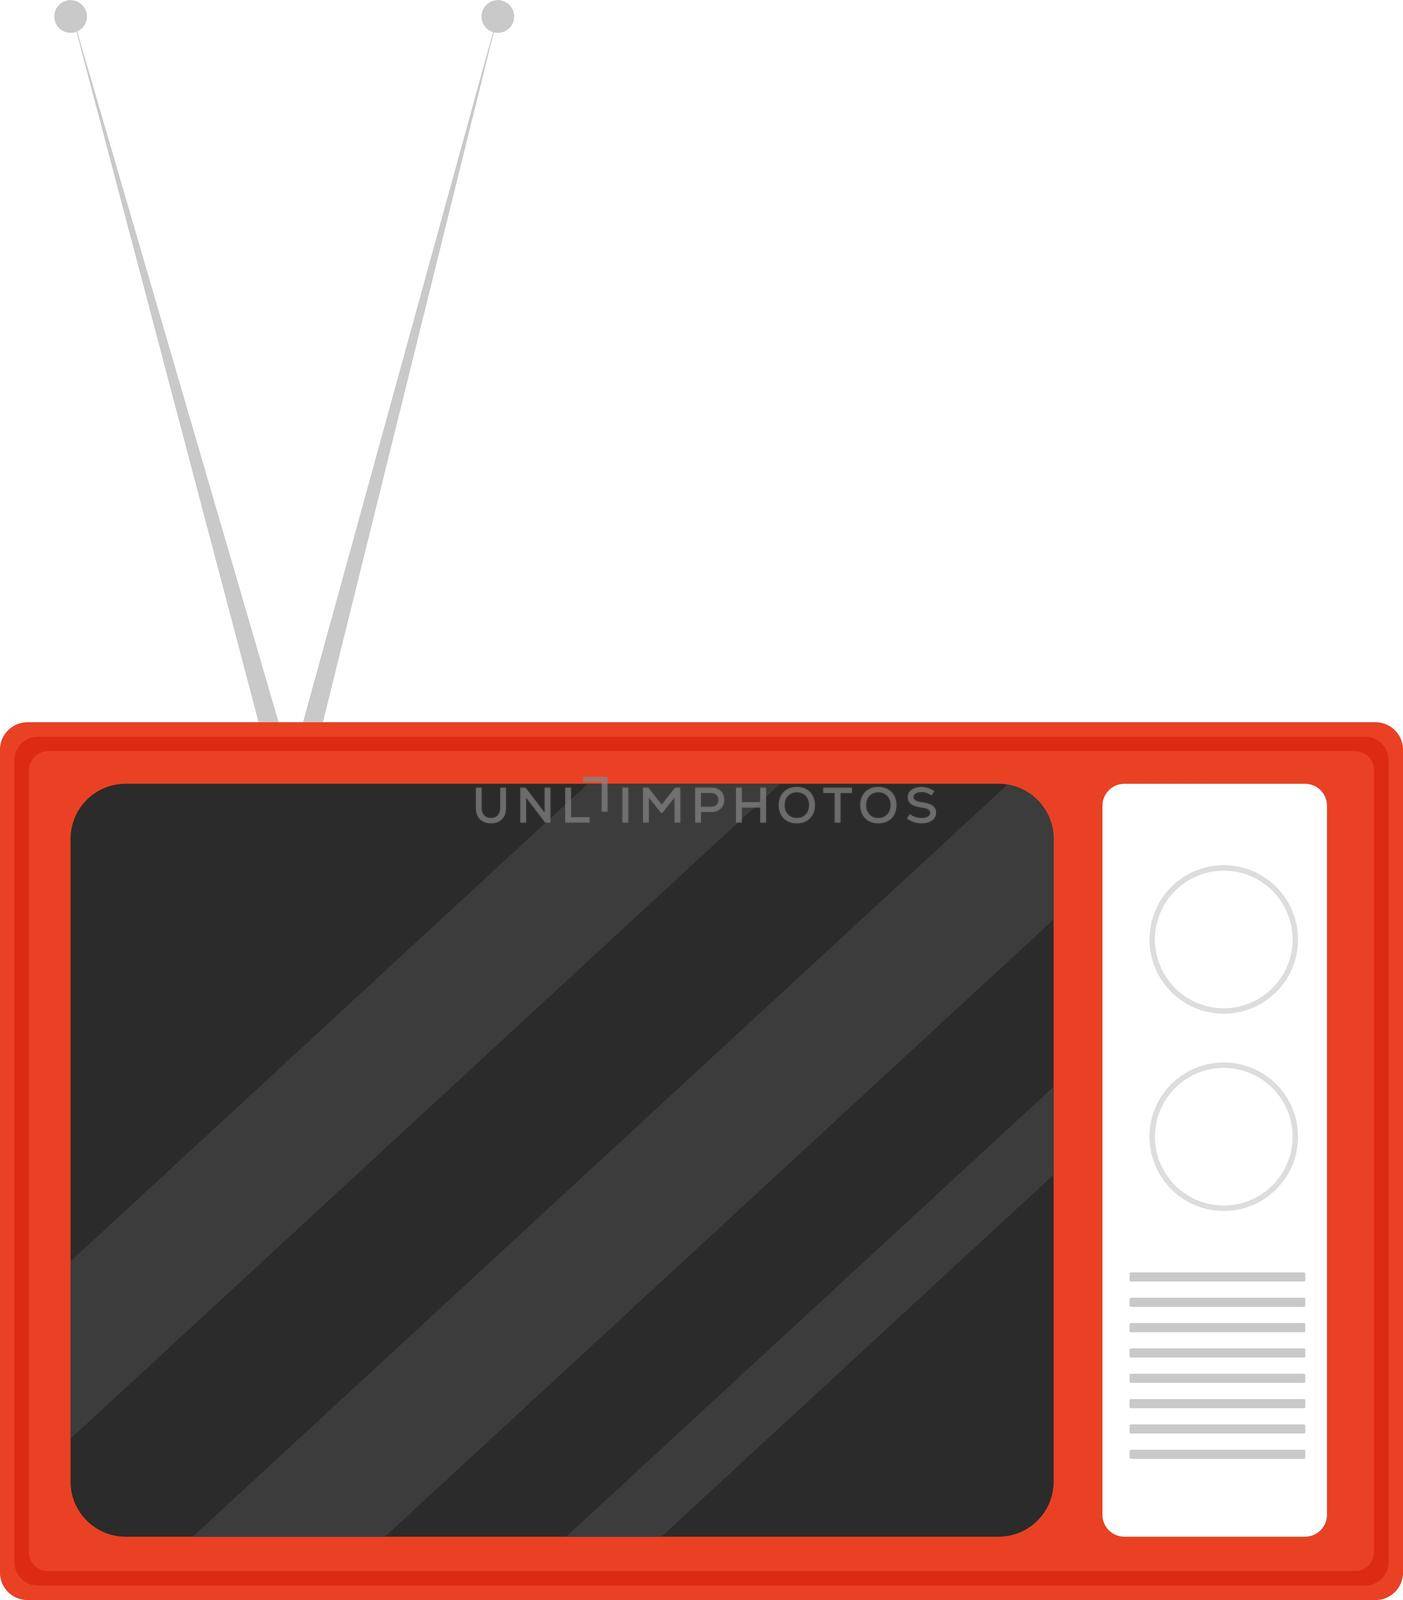 Small retro TV, illustration, vector on white background.